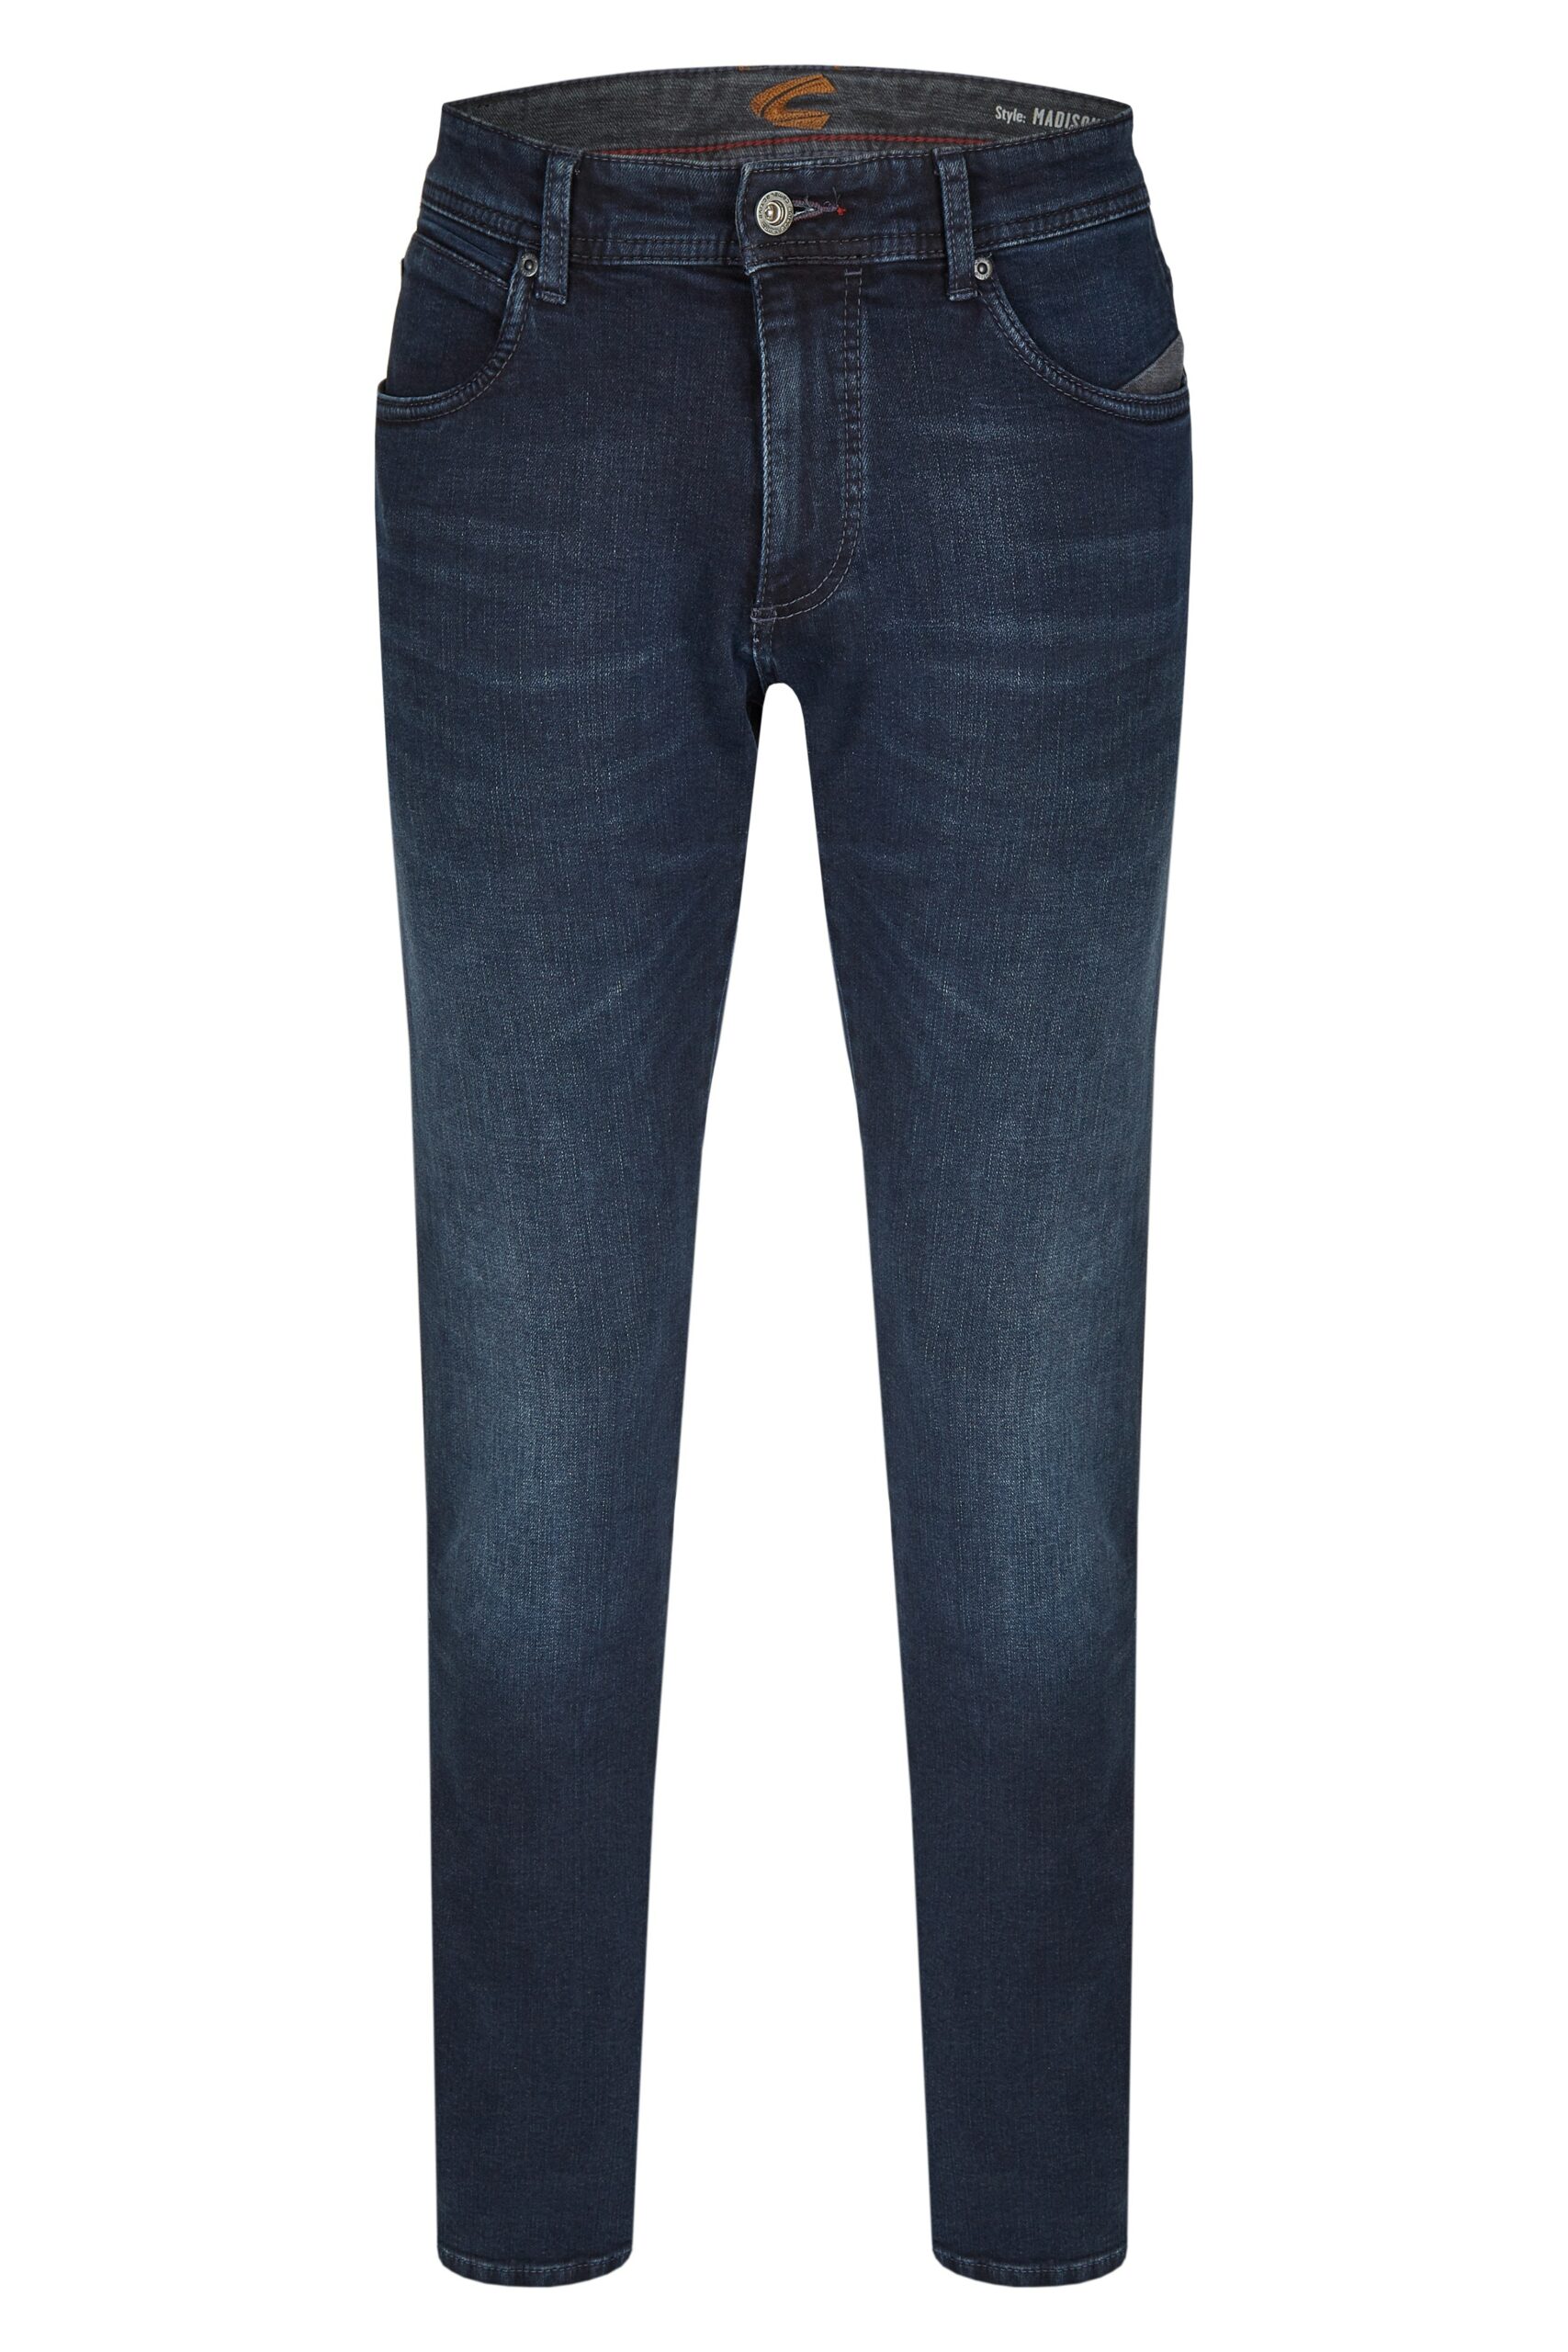 CAMEL active Slim Fit Jeans mit Hartmann 5-POCKET Shop - Mode MADISON Stretch